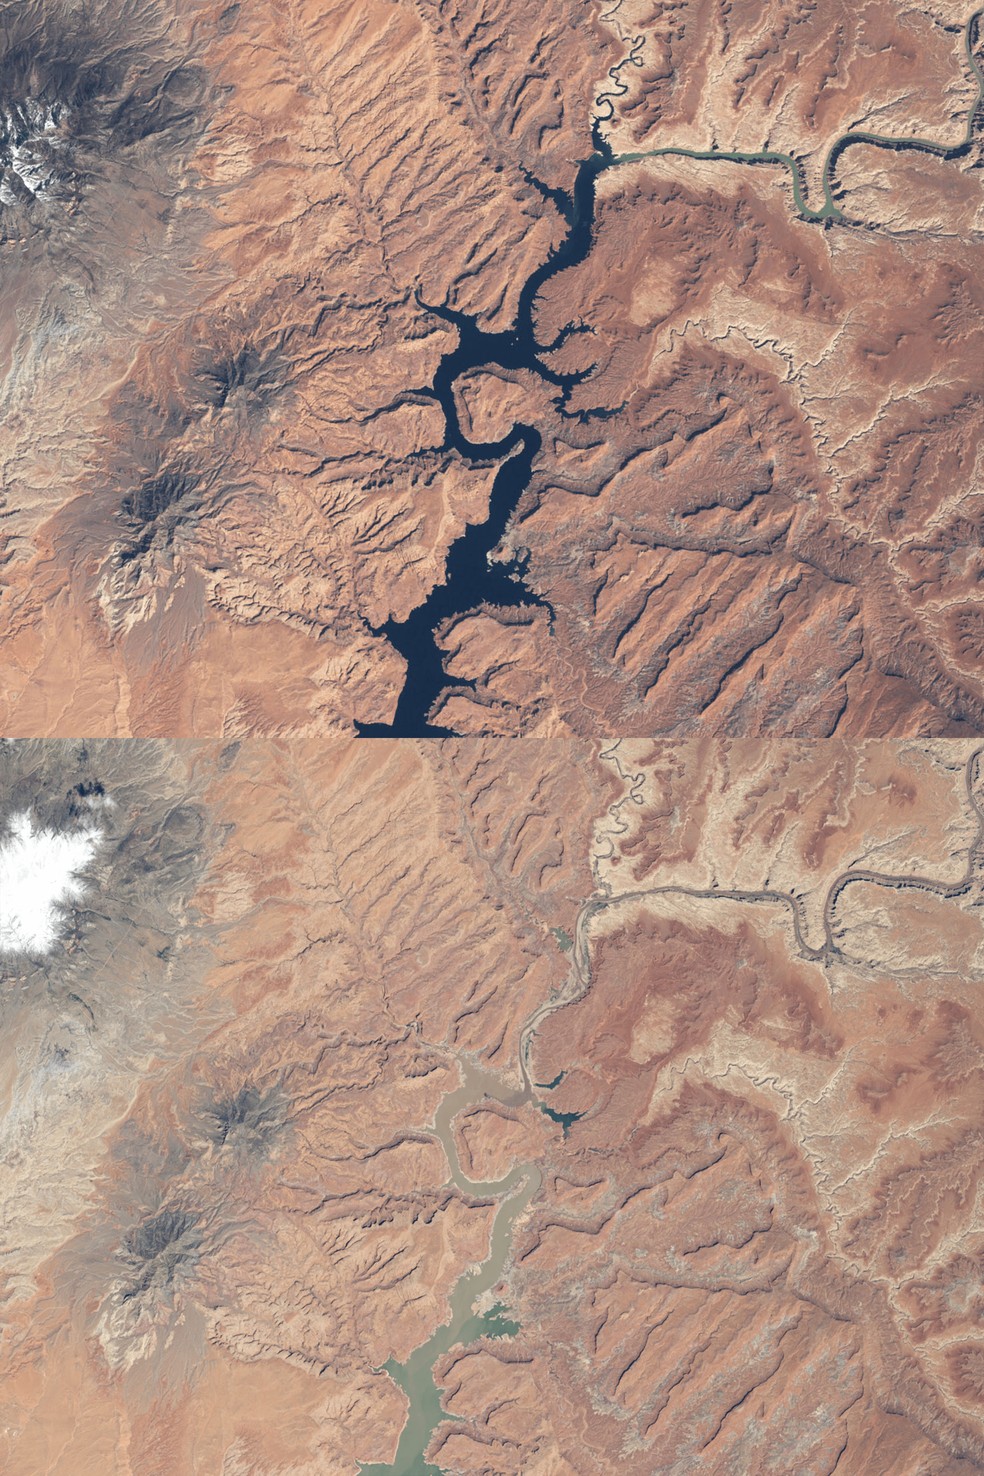 Seca no Lago Powell, Arizona e Utah, nos Estados Unidos — Foto: NASA